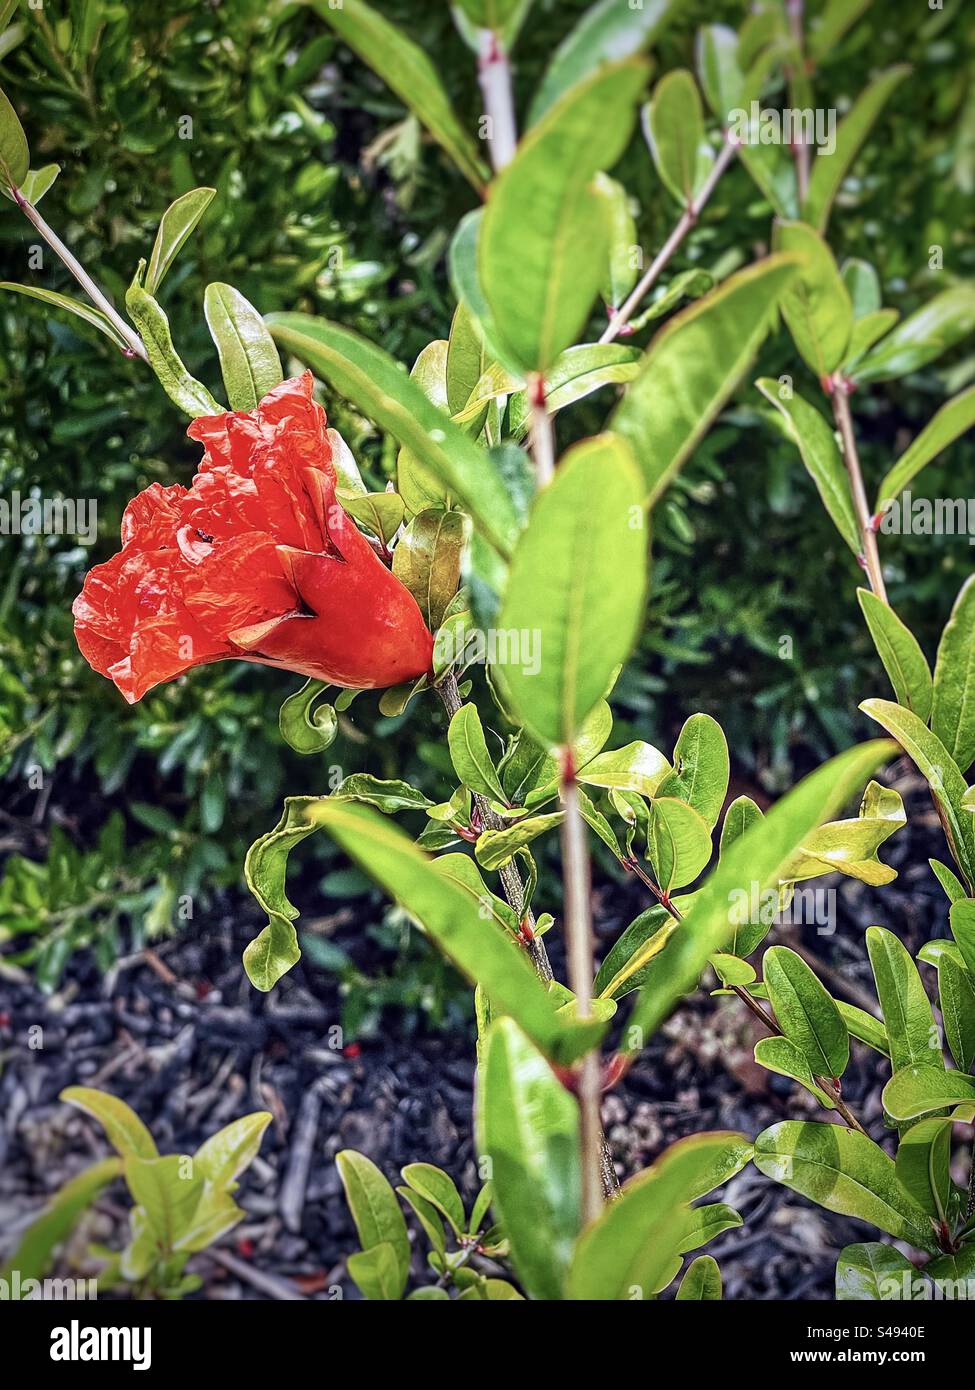 Crimson pomegranate/Punica granatum flower developing into fruit on shrub in garden. Stock Photo